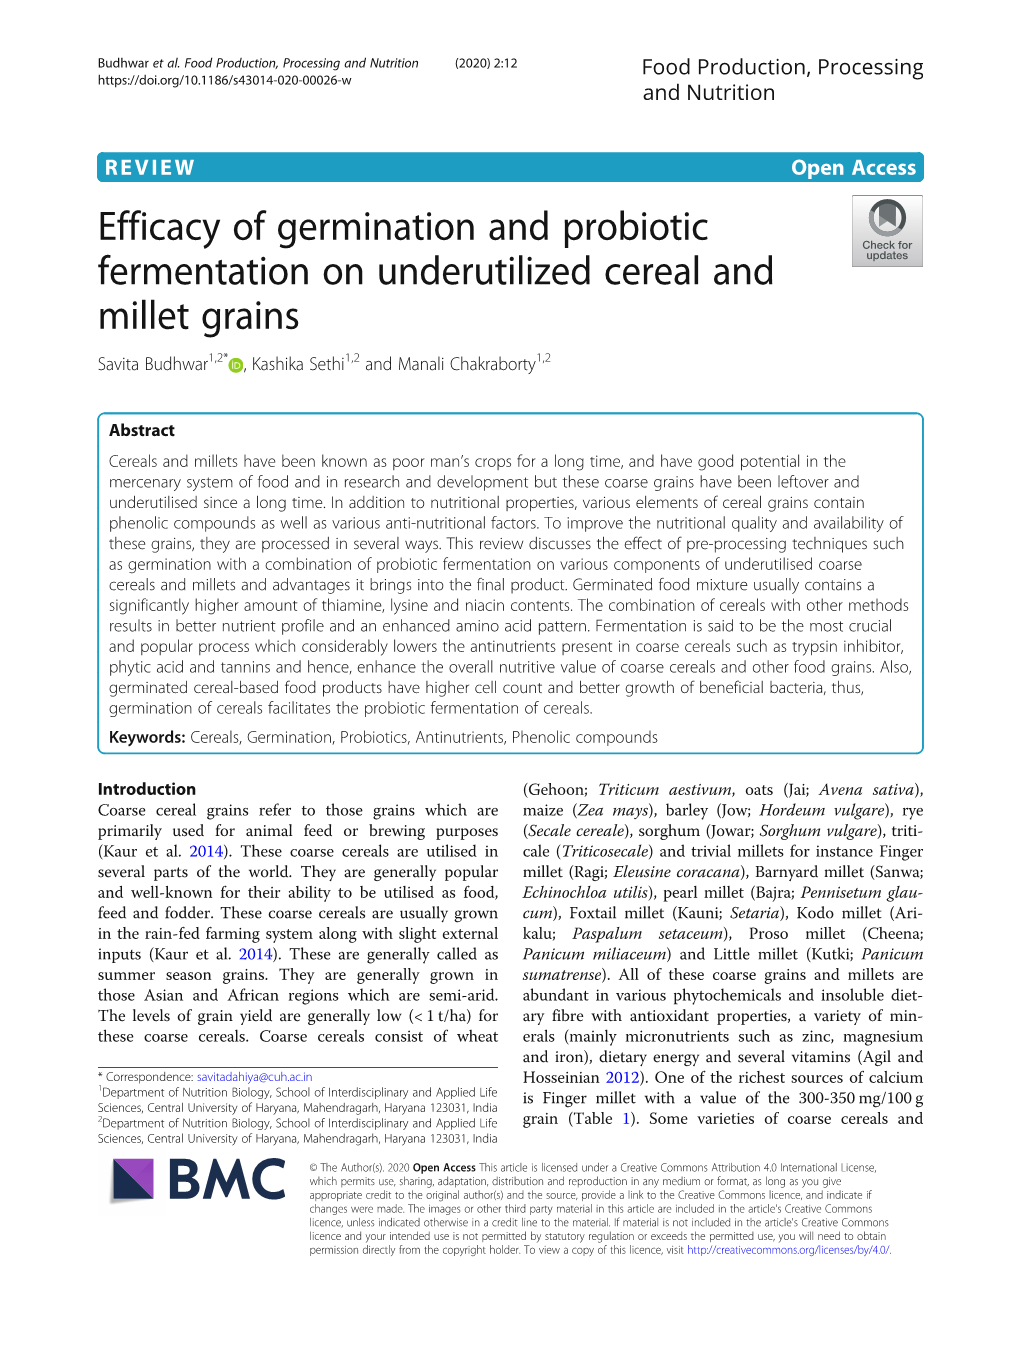 Efficacy of Germination and Probiotic Fermentation on Underutilized Cereal and Millet Grains Savita Budhwar1,2* , Kashika Sethi1,2 and Manali Chakraborty1,2